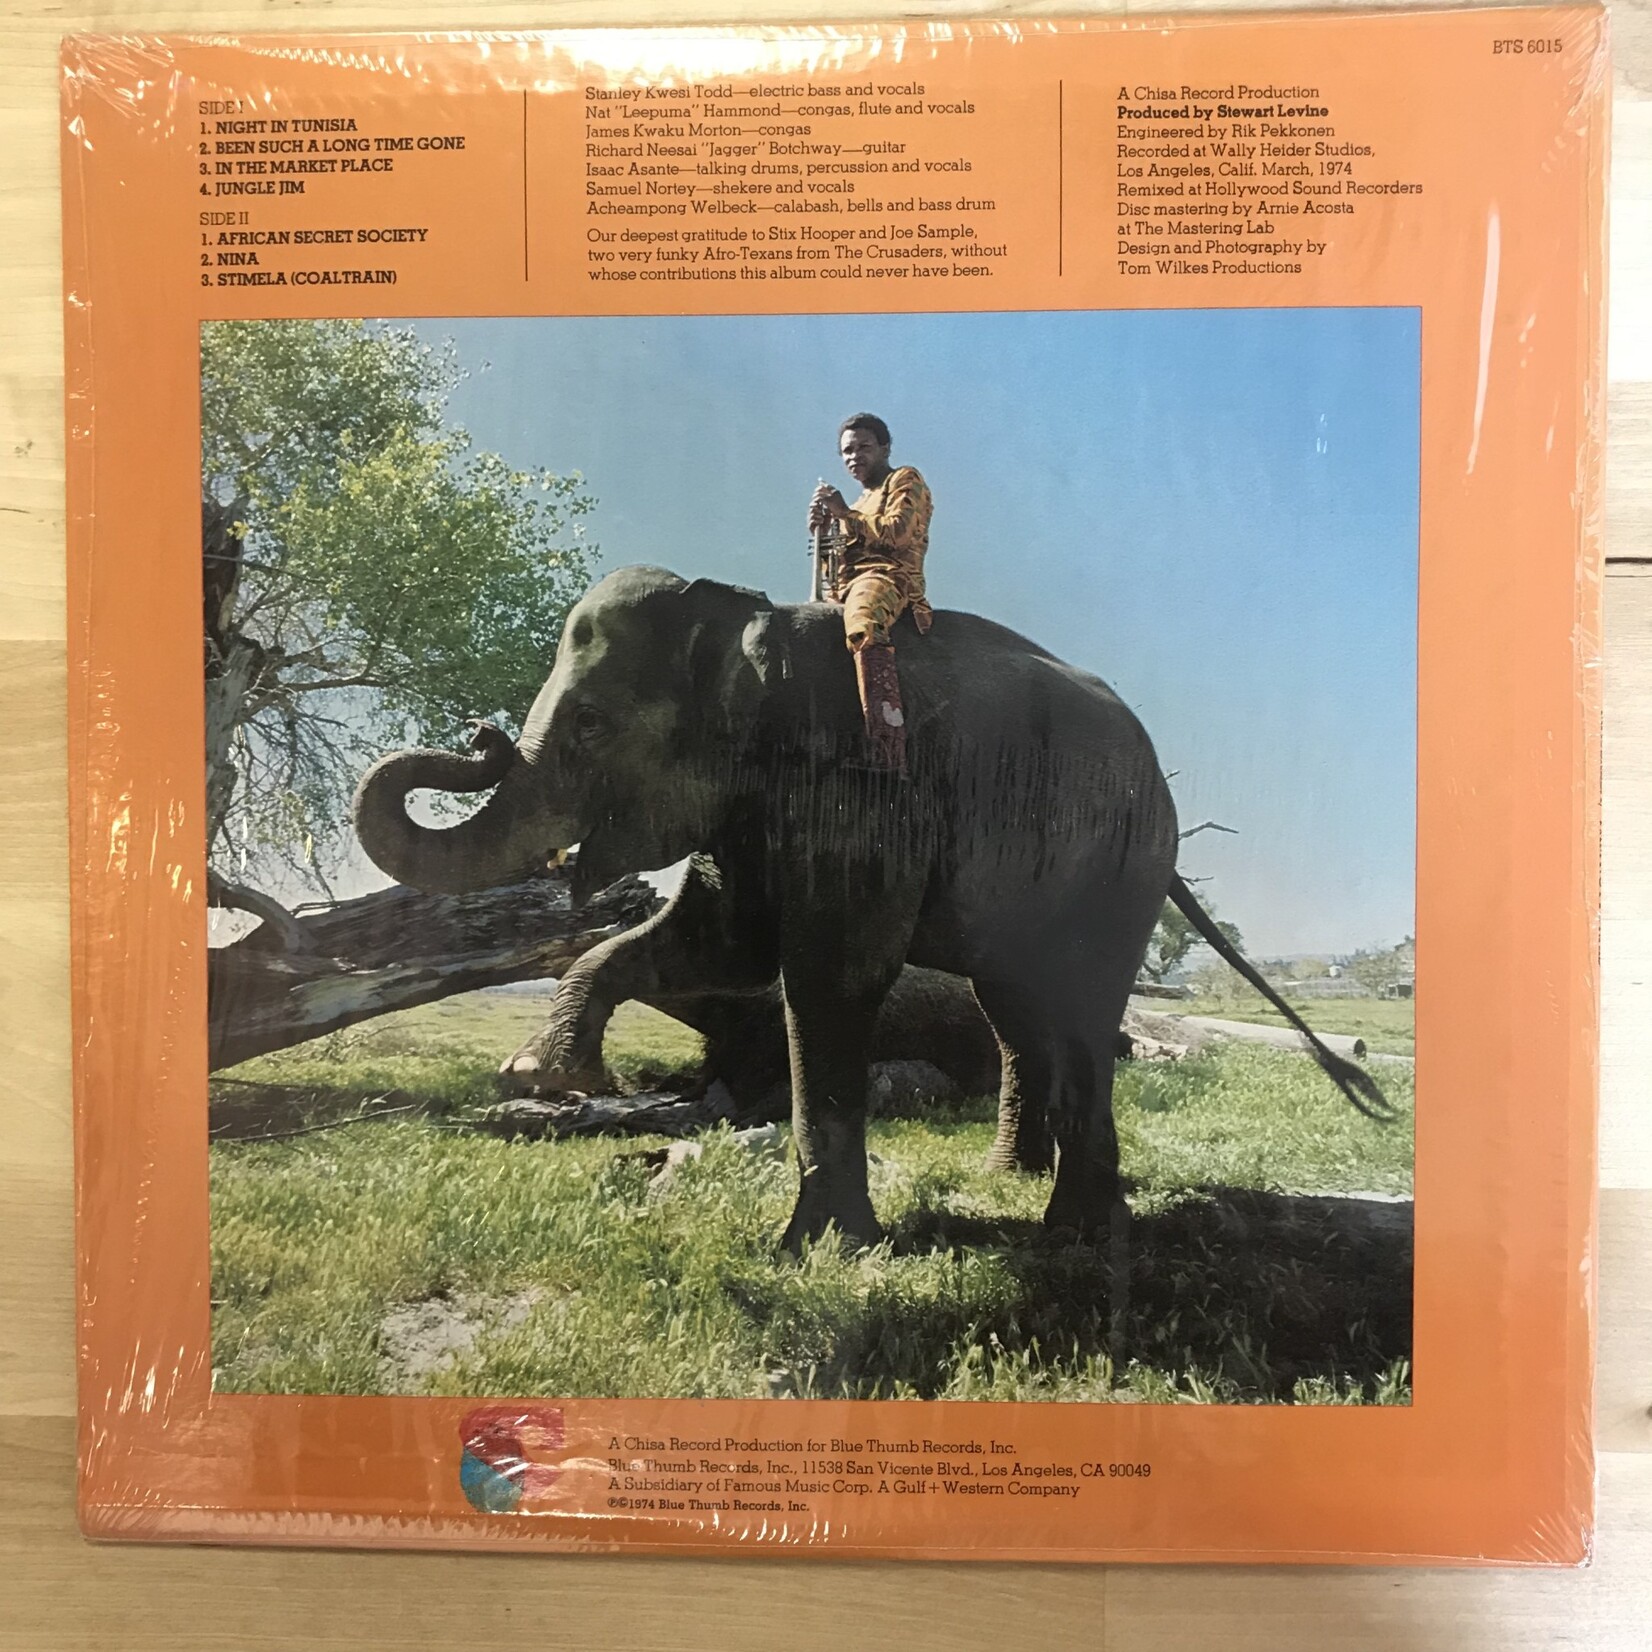 Hugh Masekela - I Am Not Afraid - BTS6015 - Vinyl LP (USED)